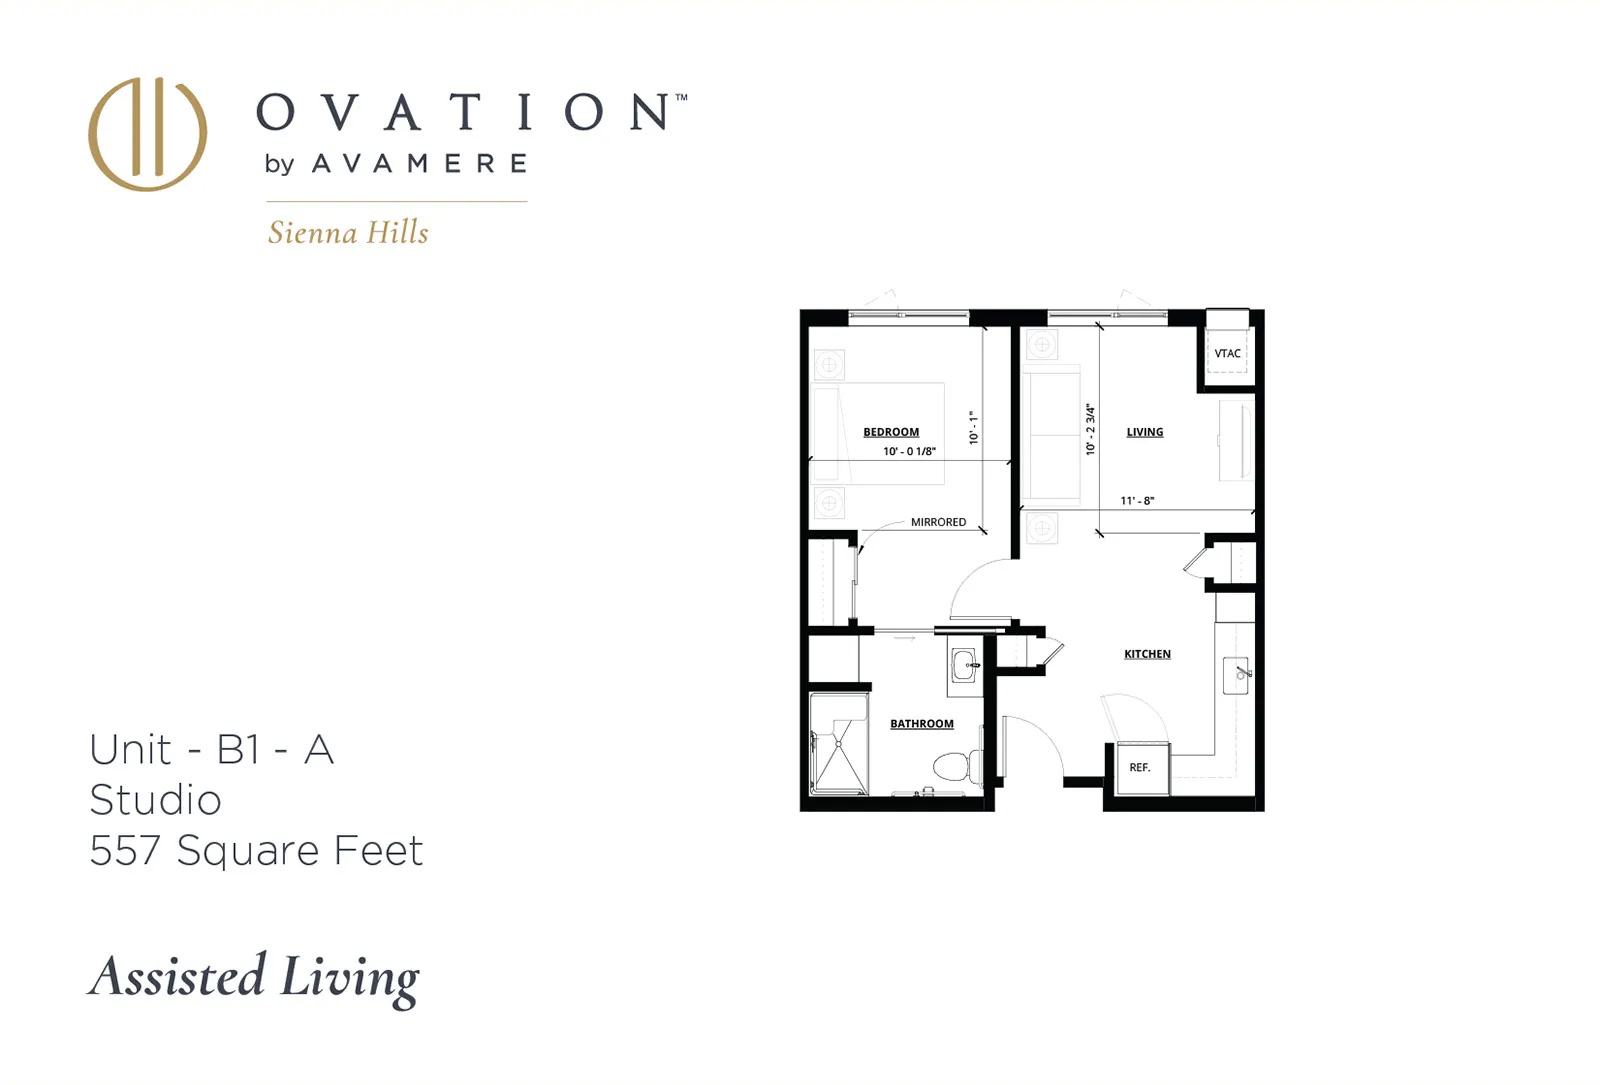 Ovation Sienna Hills Studio Floorplan 557 sq ft